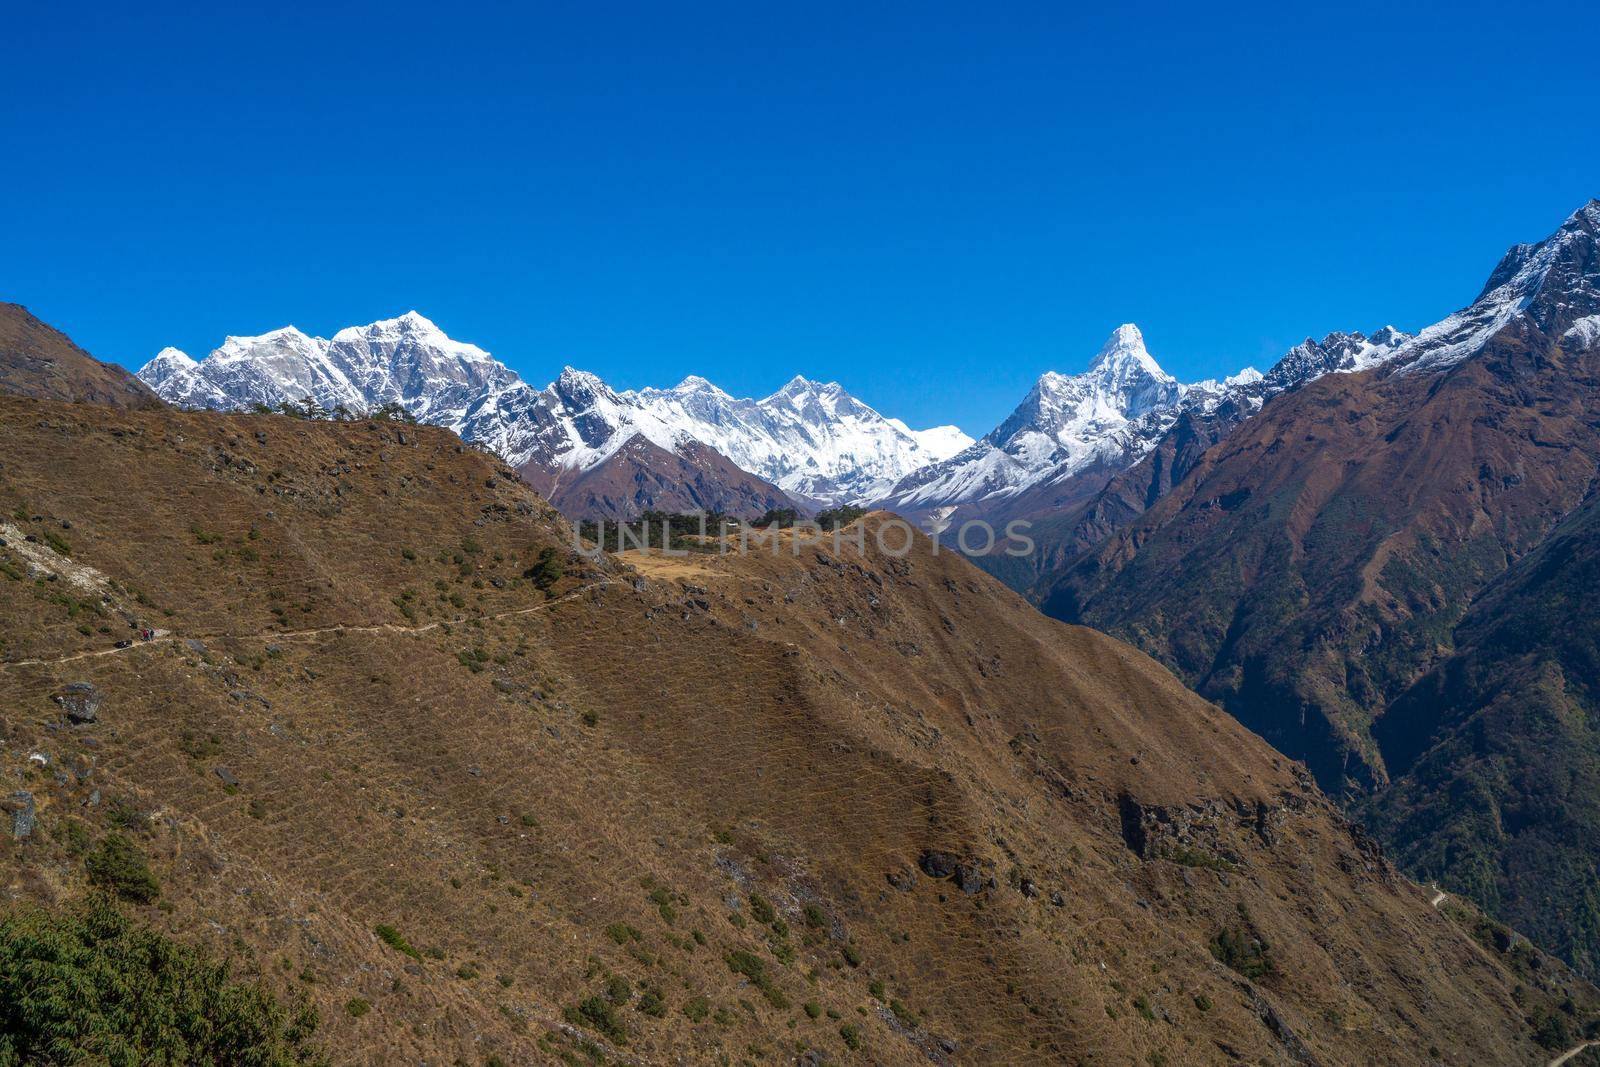 Everest, Lhotse and Ama Dablam summits by Arsgera